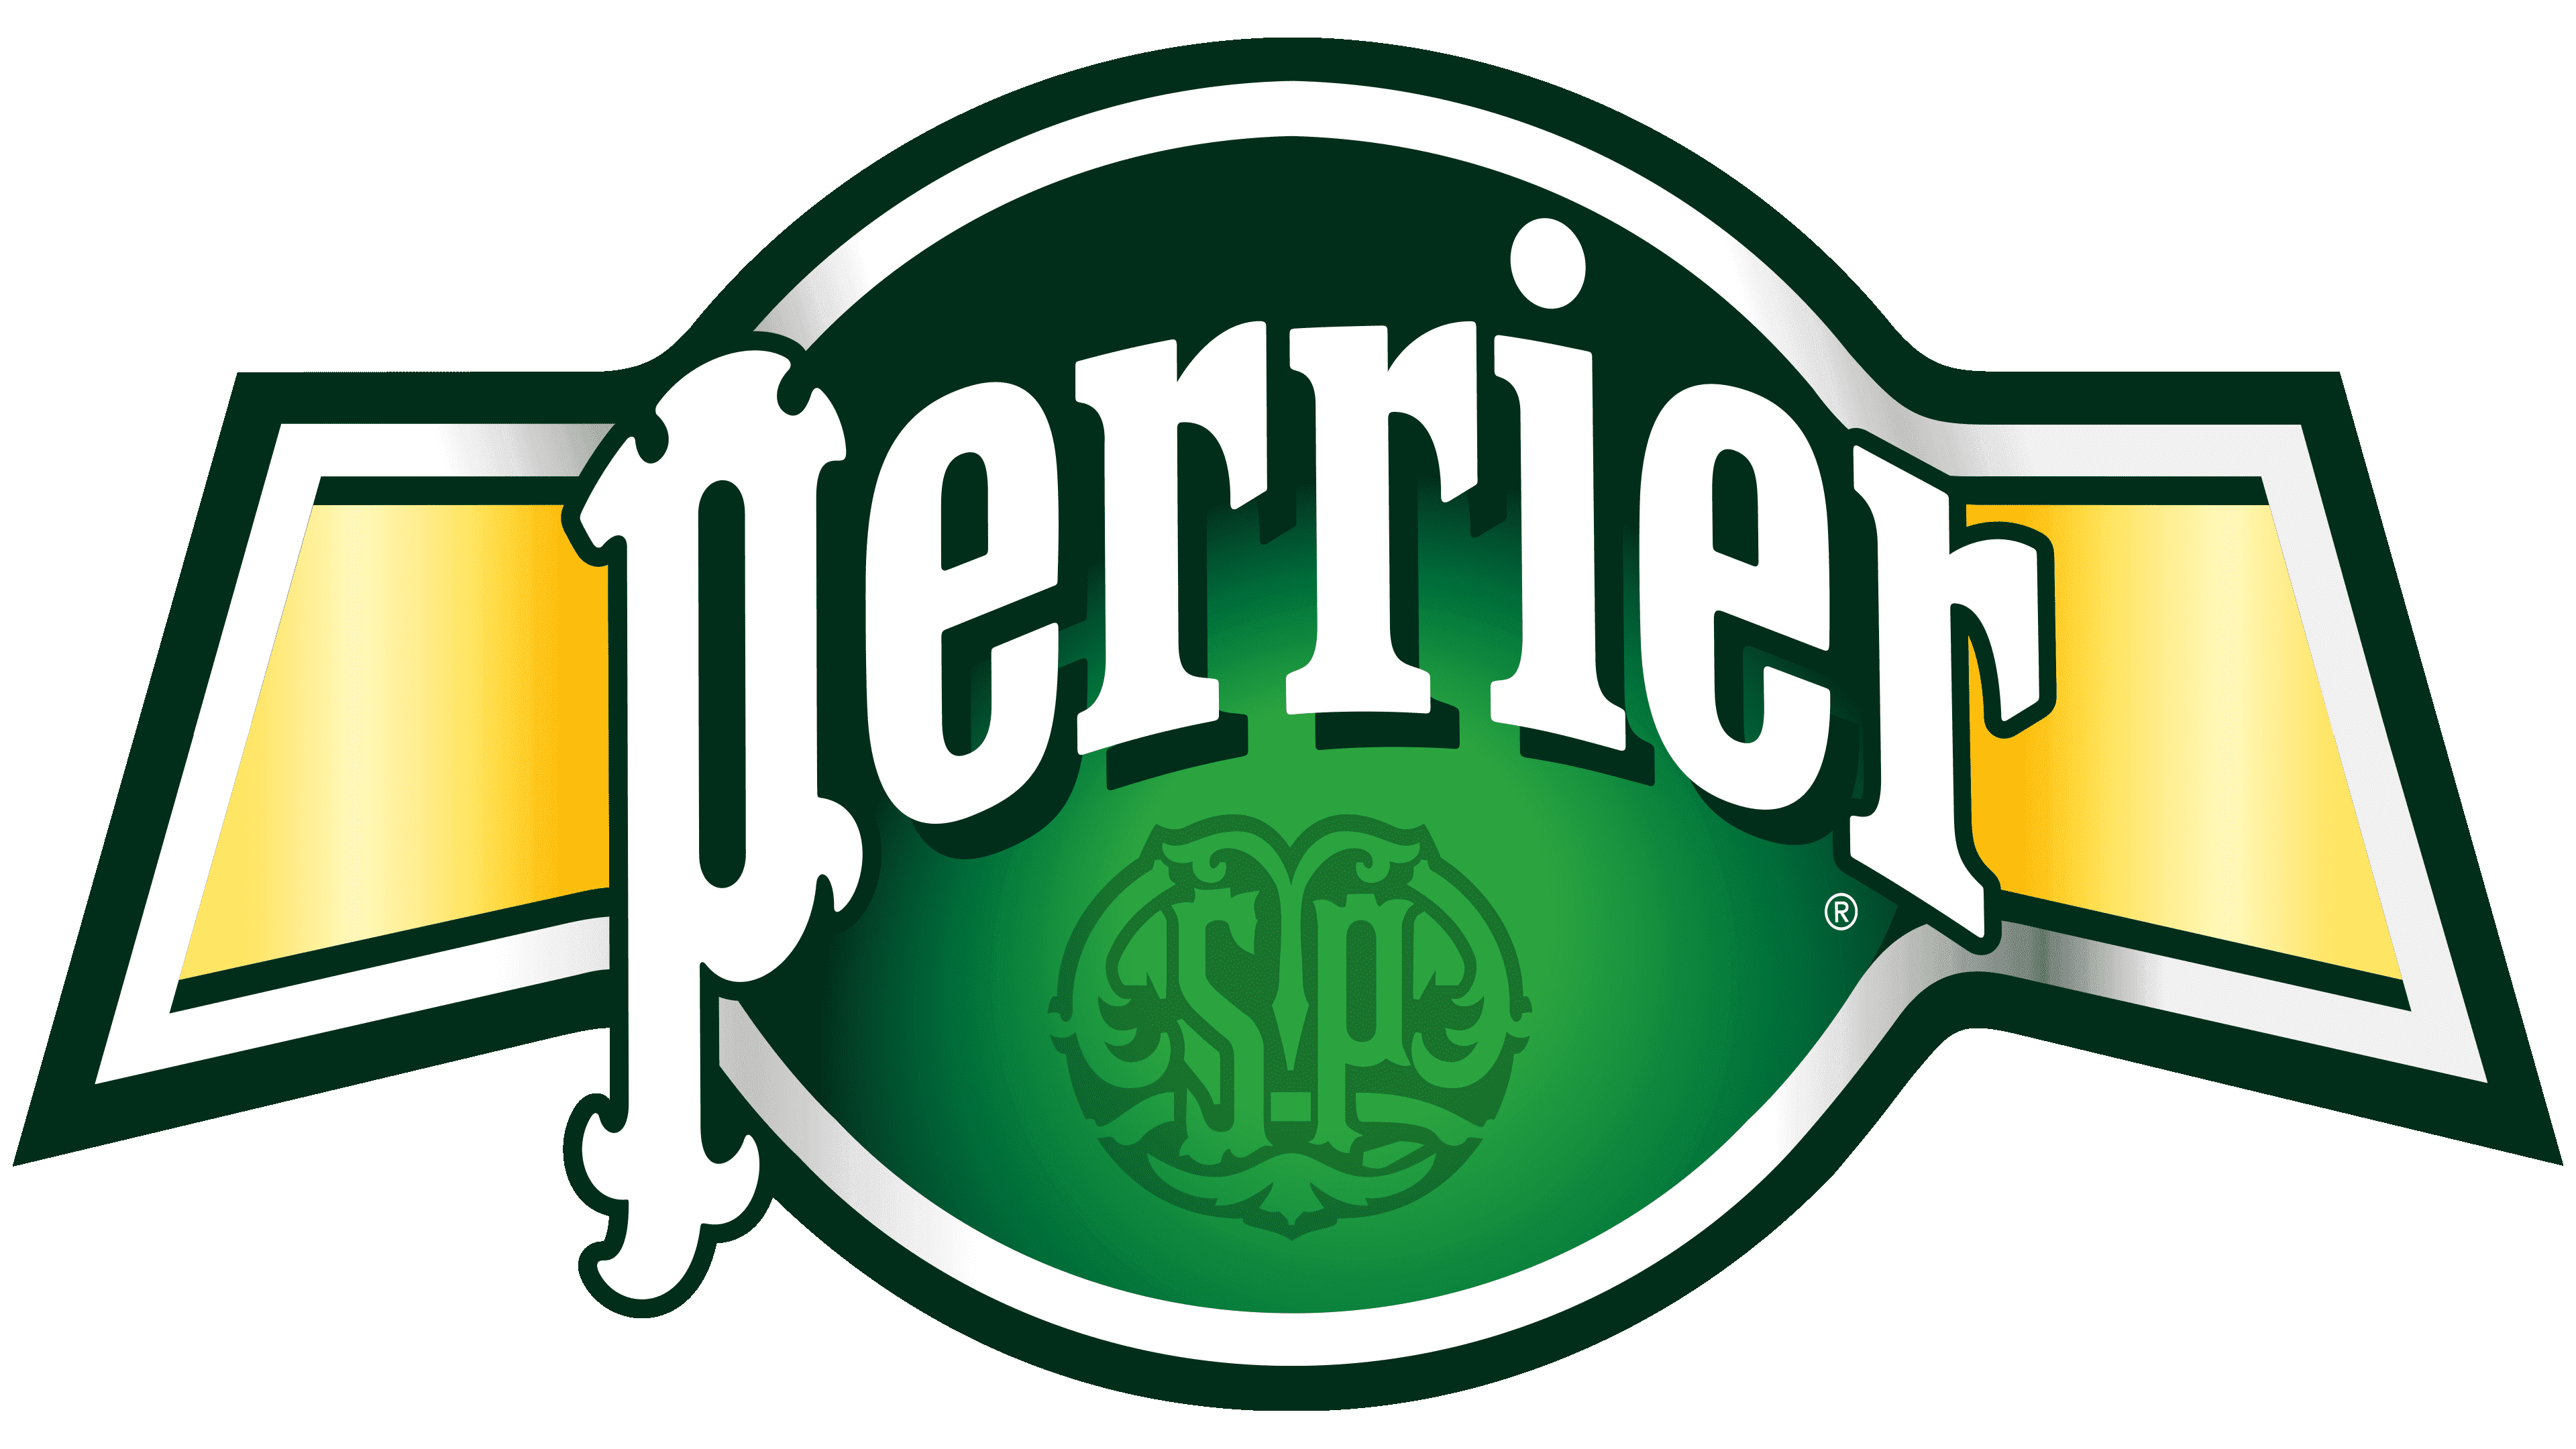 Perrier Logo